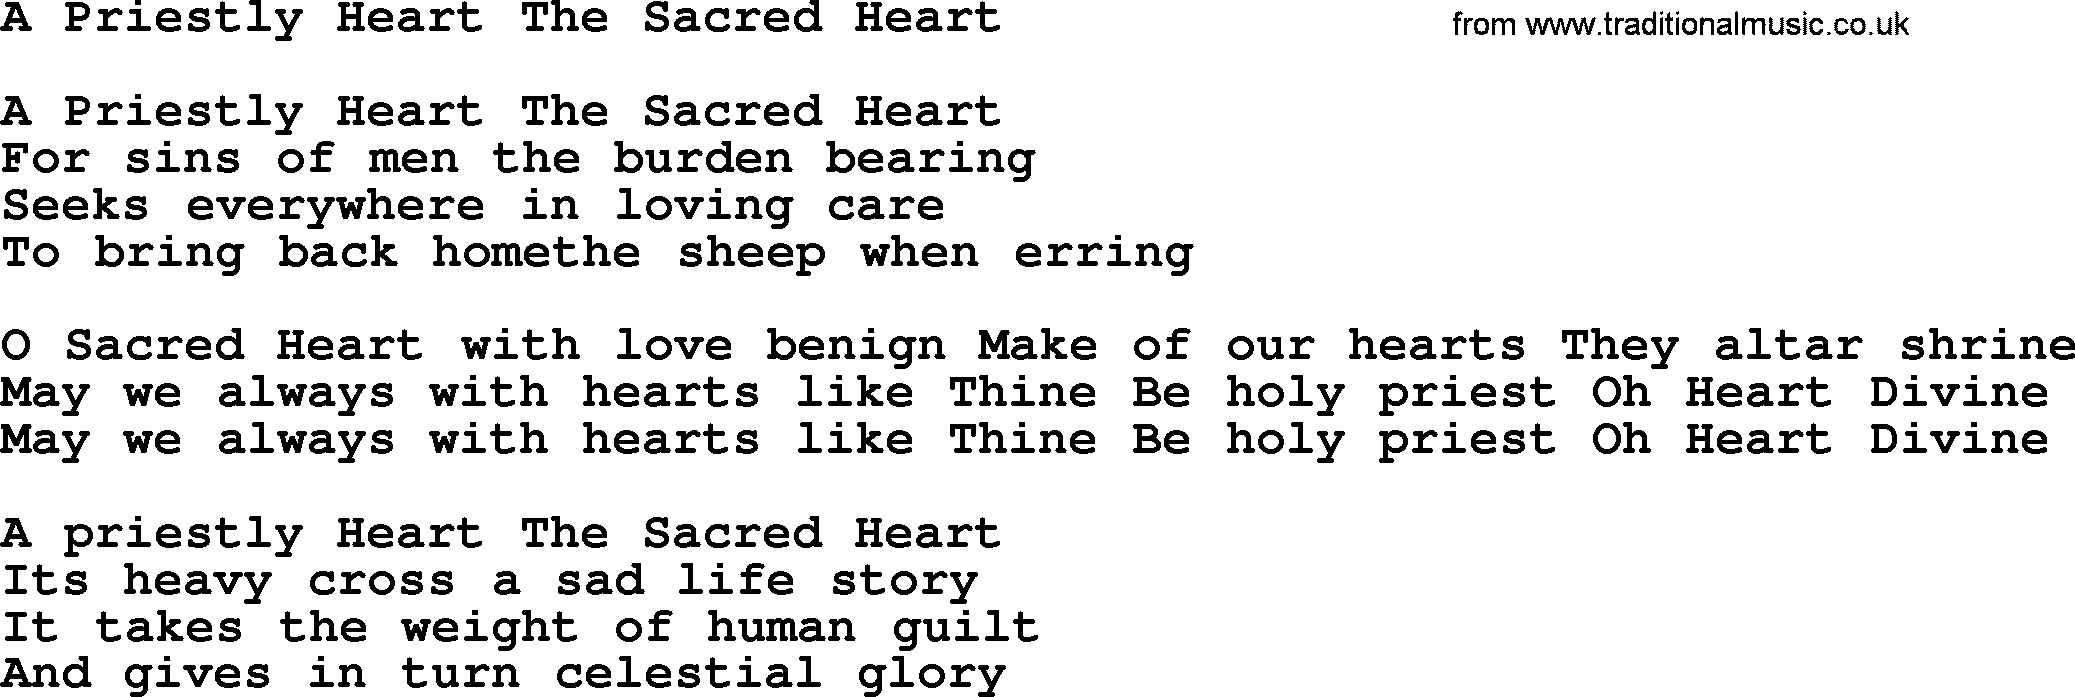 Catholic Hymn: A Priestly Heart The Sacred Heart lyrics with PDF